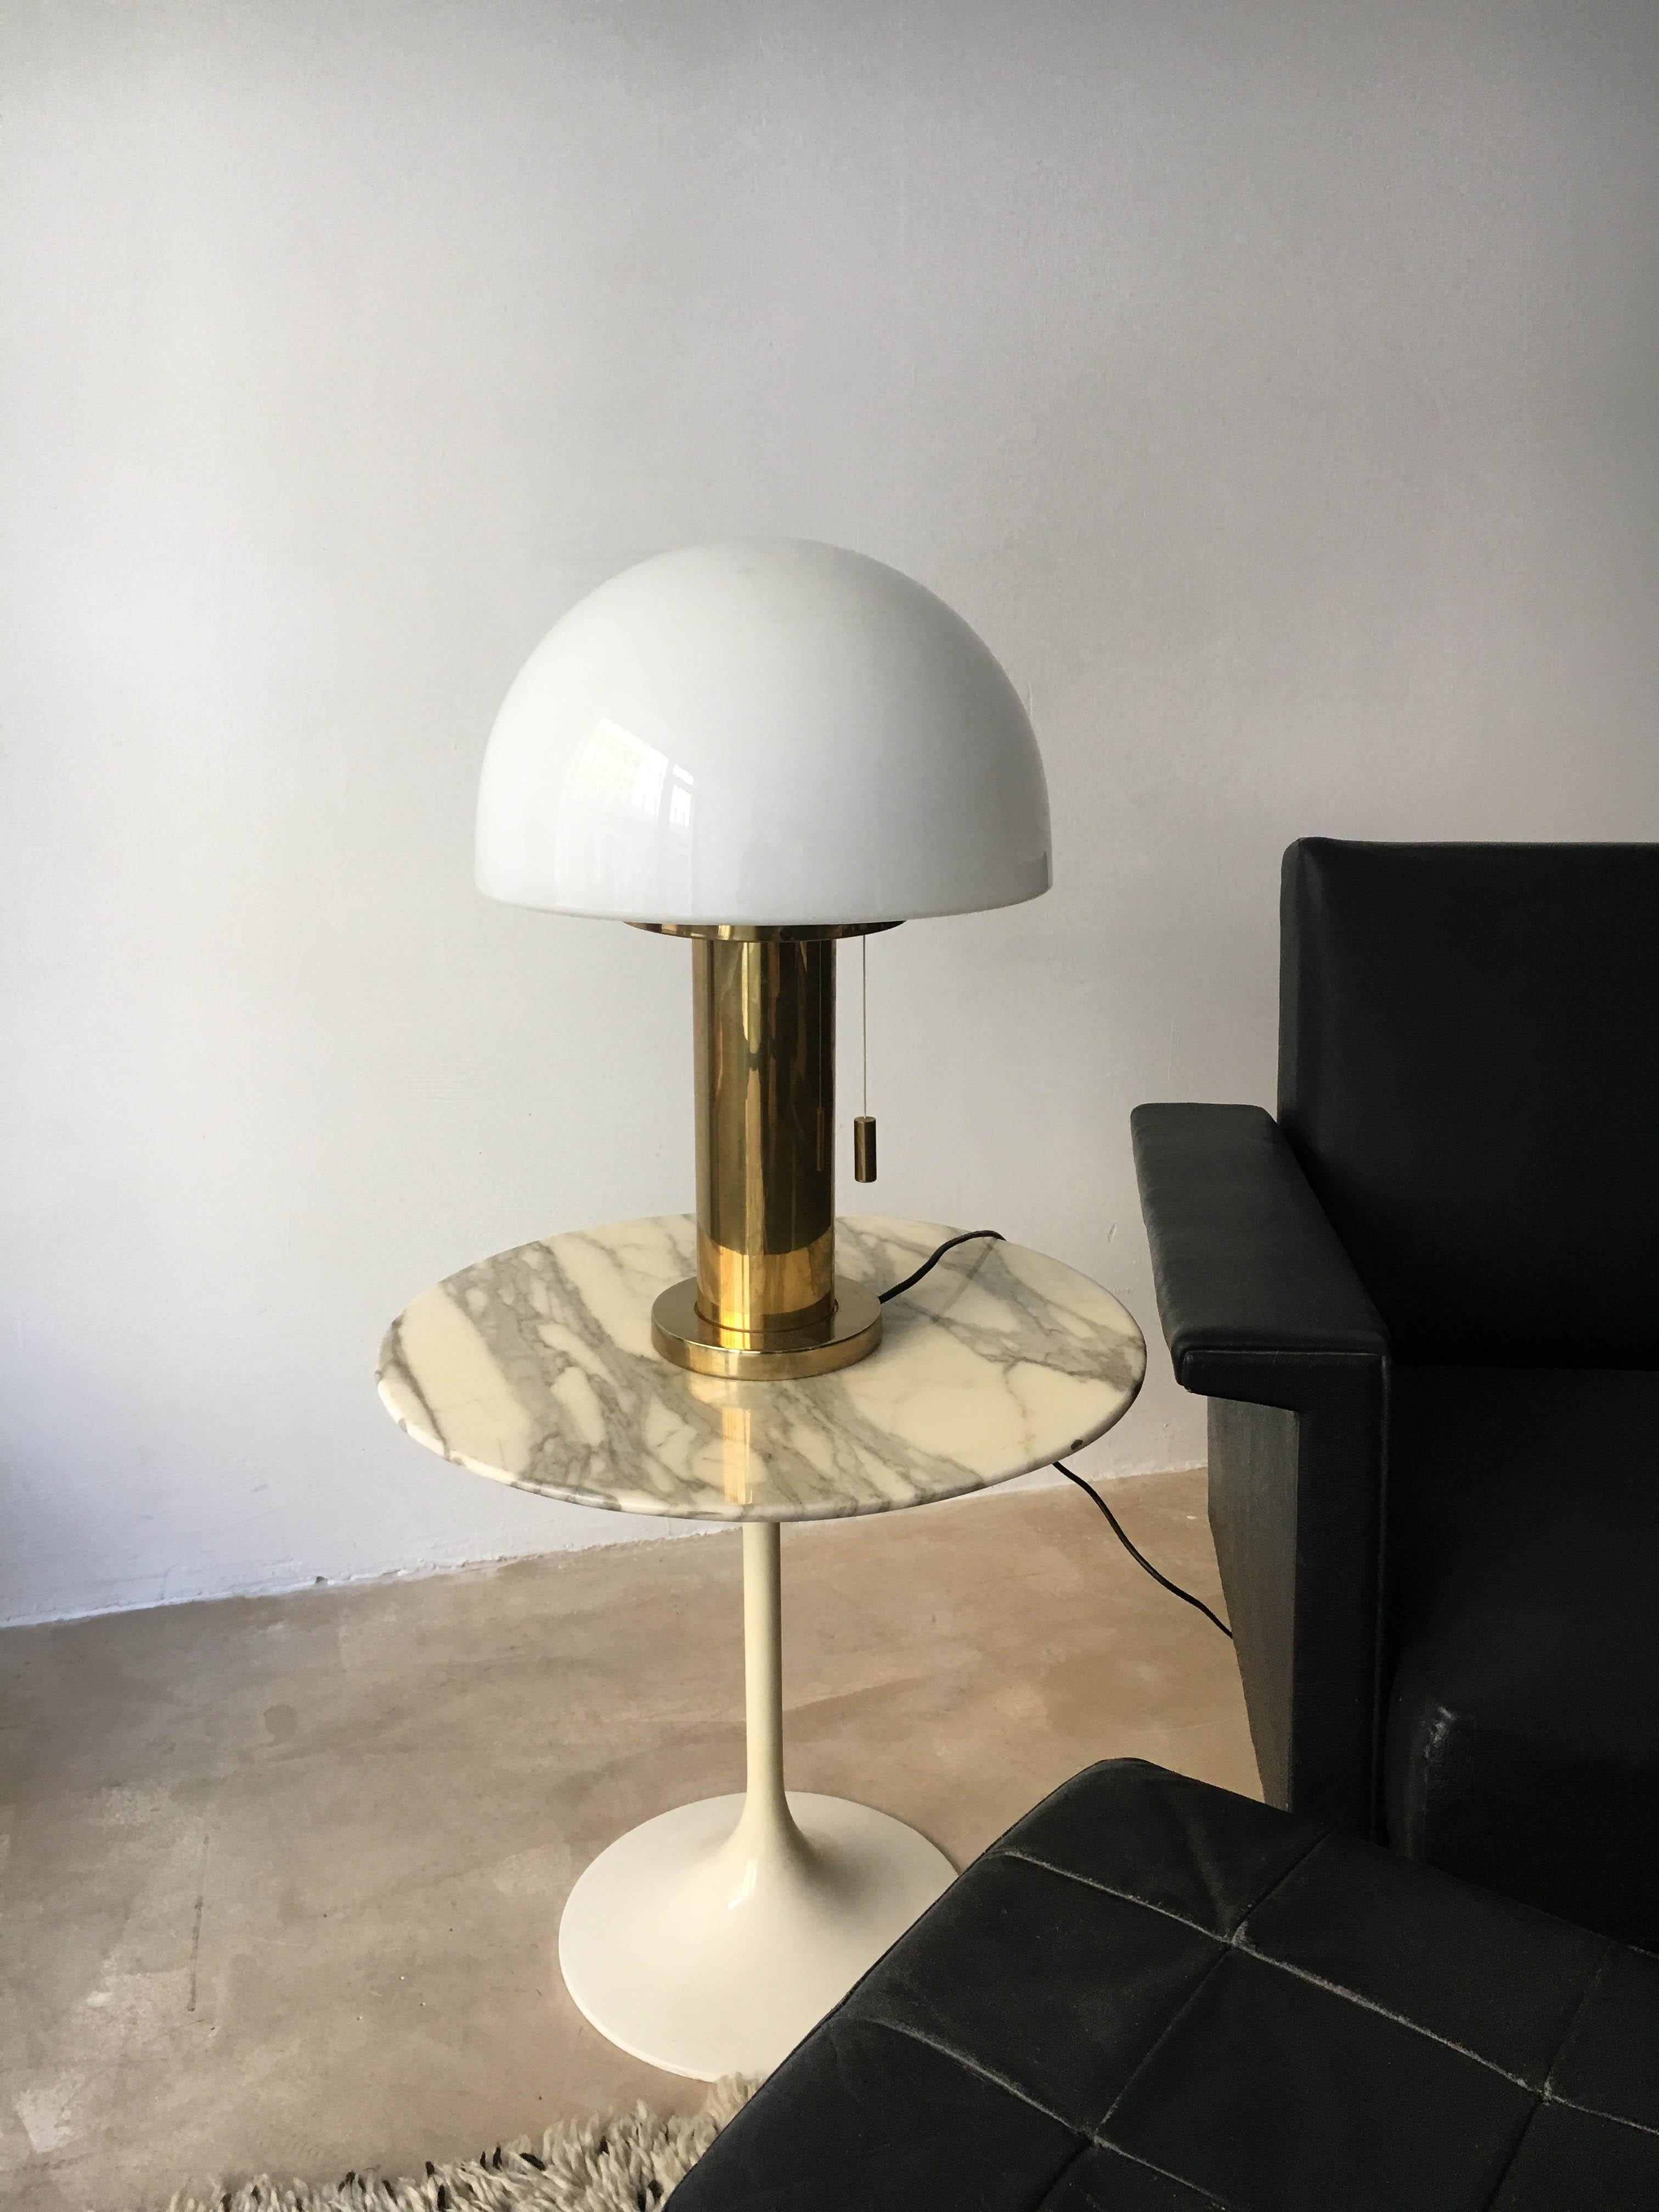 Glashütte Limburg mushroom table lamp, Germany, 1970s.